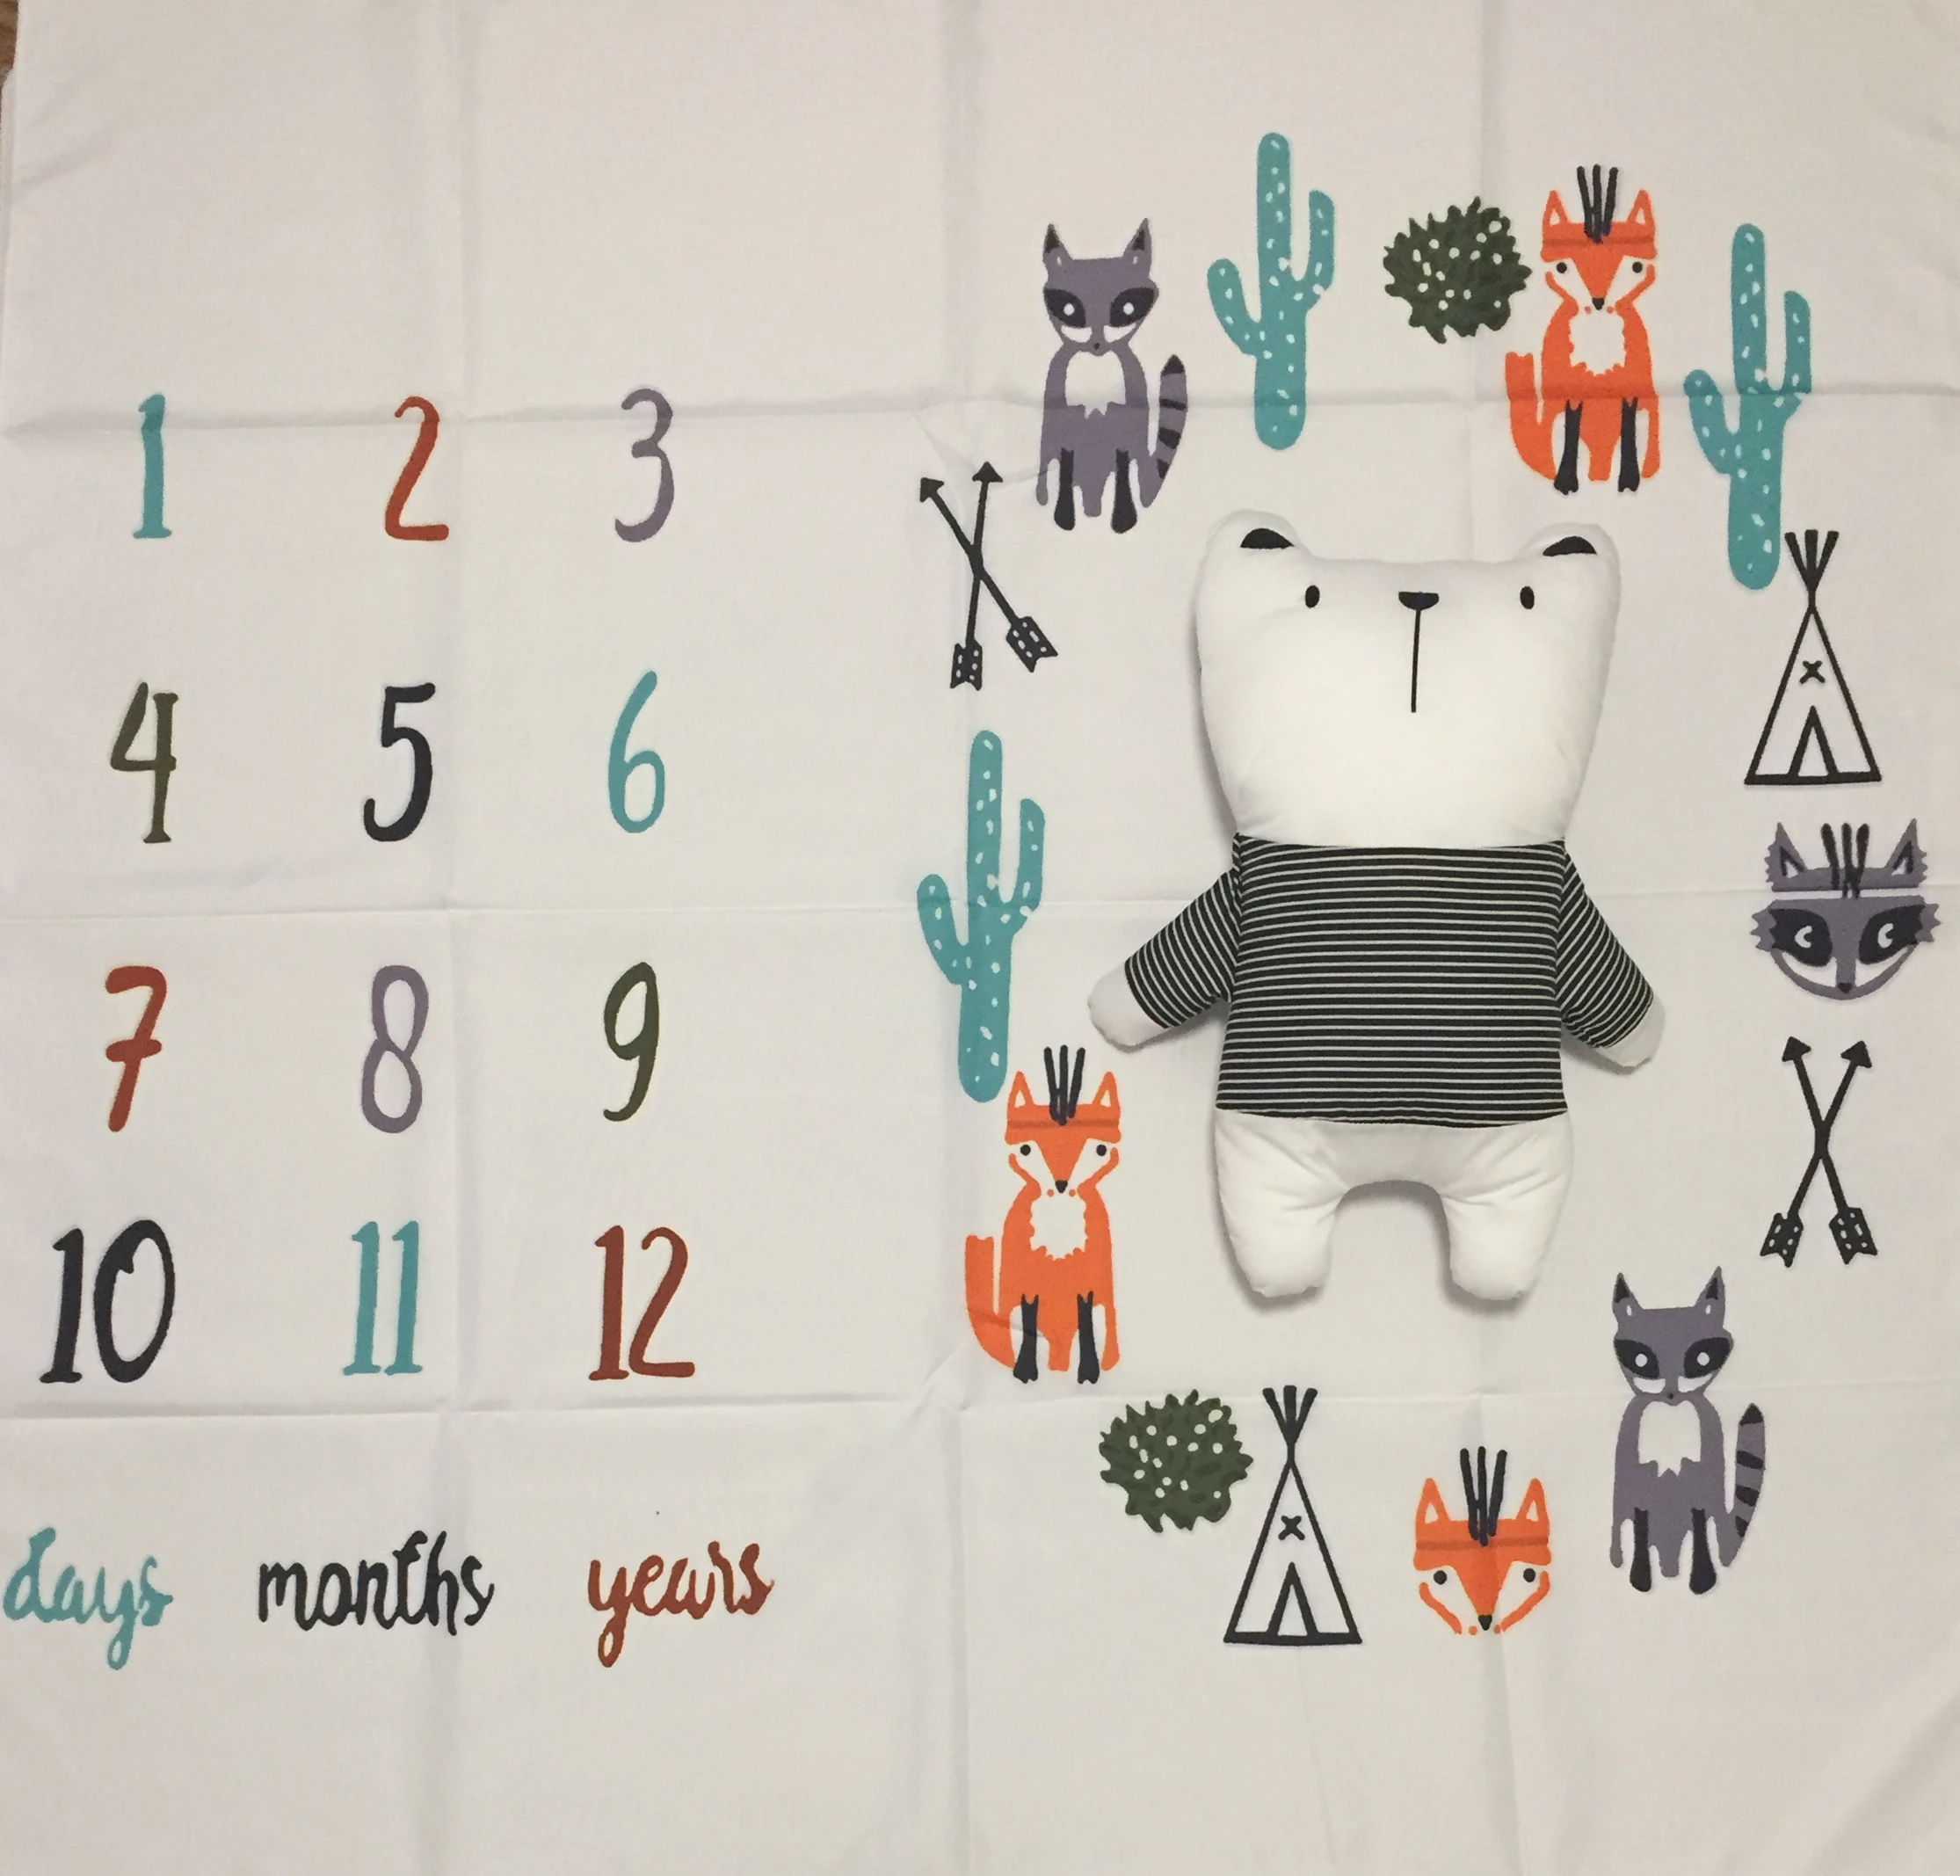 New Born baby play mat Milestone Photo Props Background Blankets Backdrop Calendar коврик детский Ph